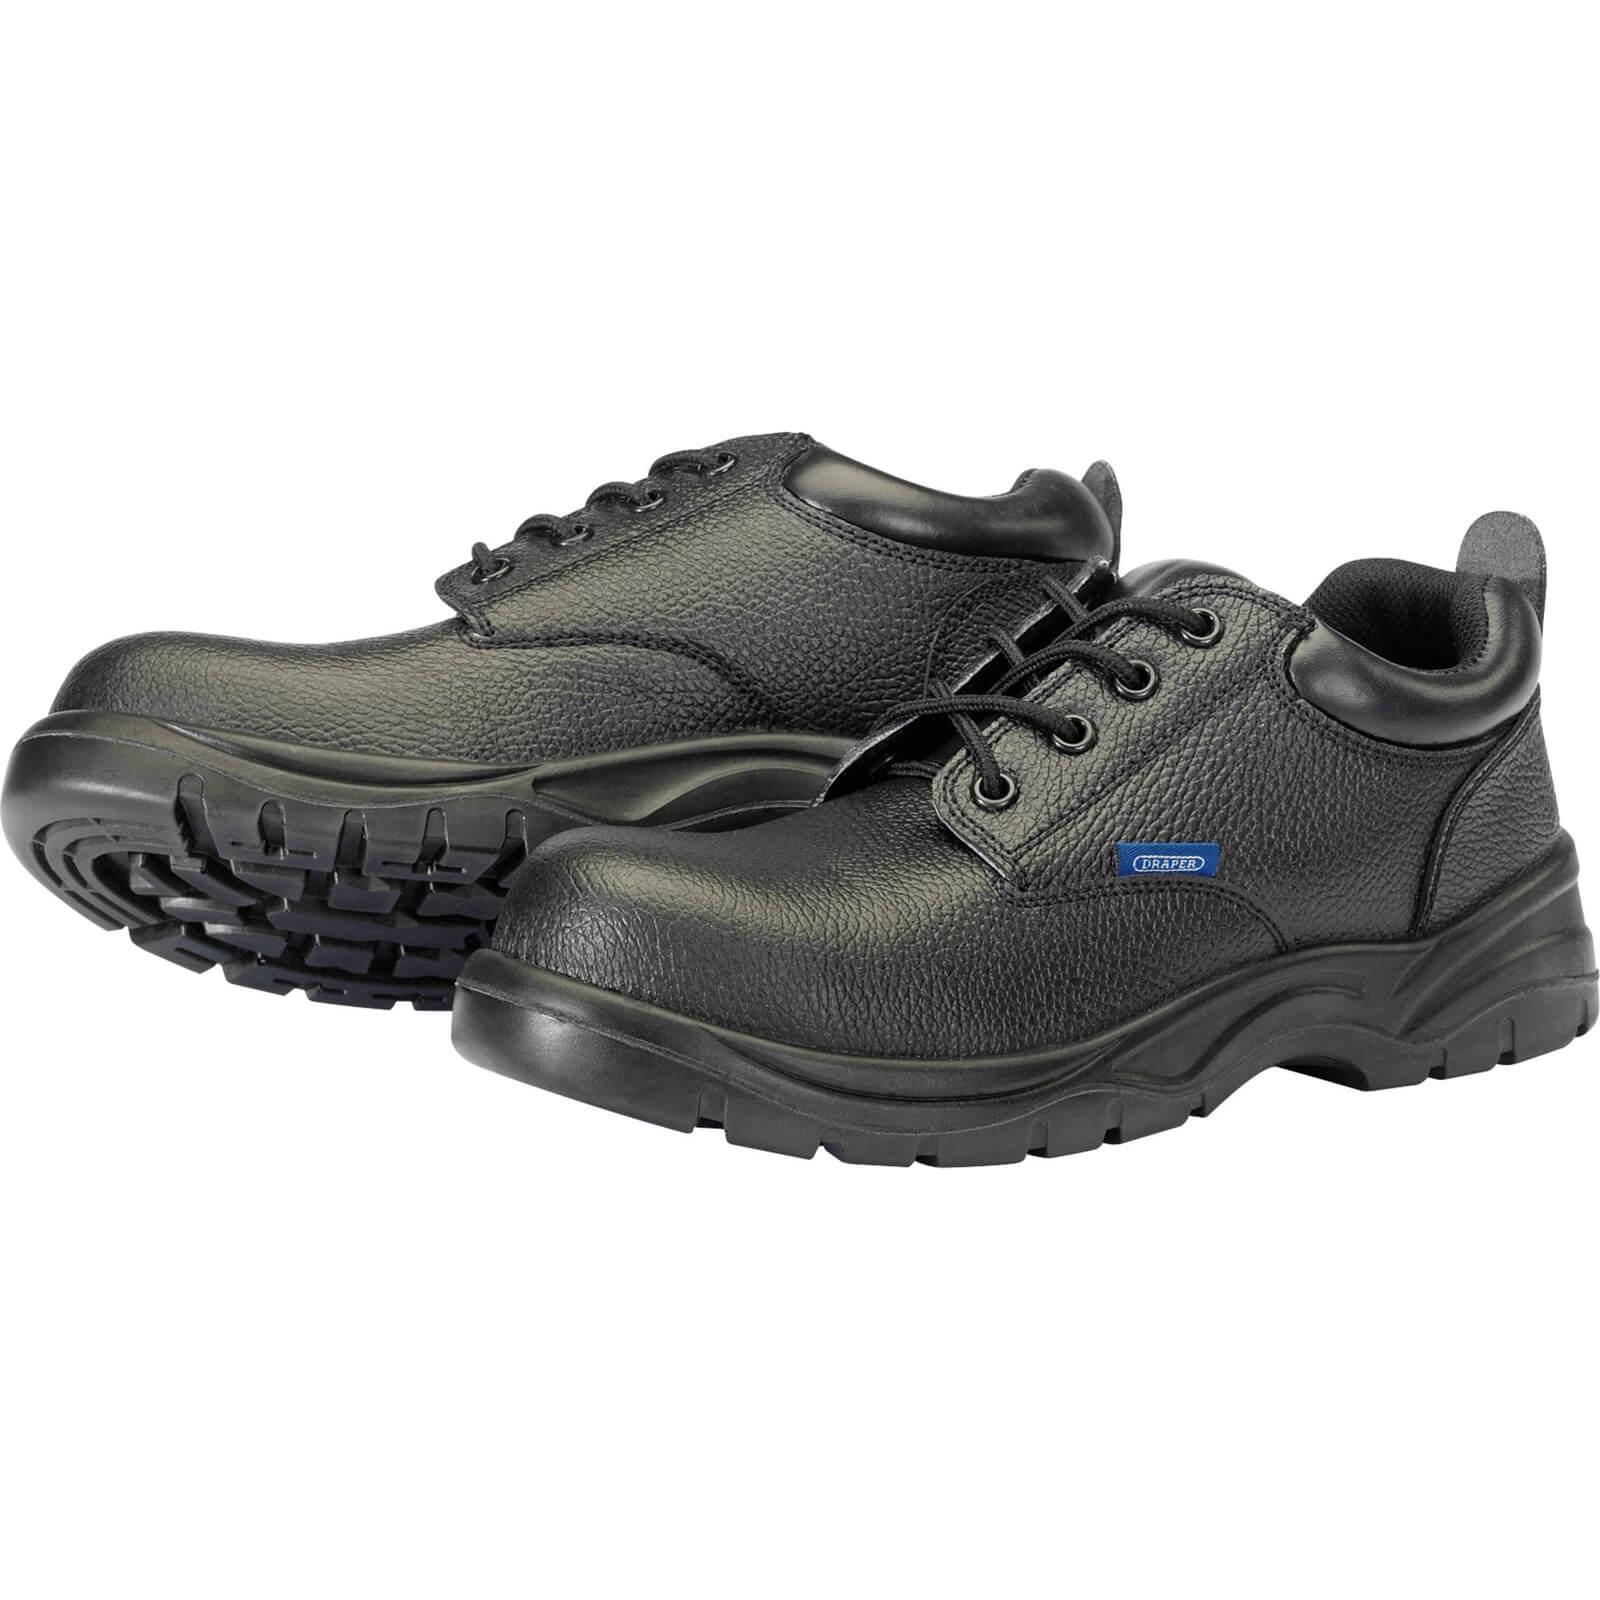 Image of Draper Non Metallic Composite Safety Shoe Size 11